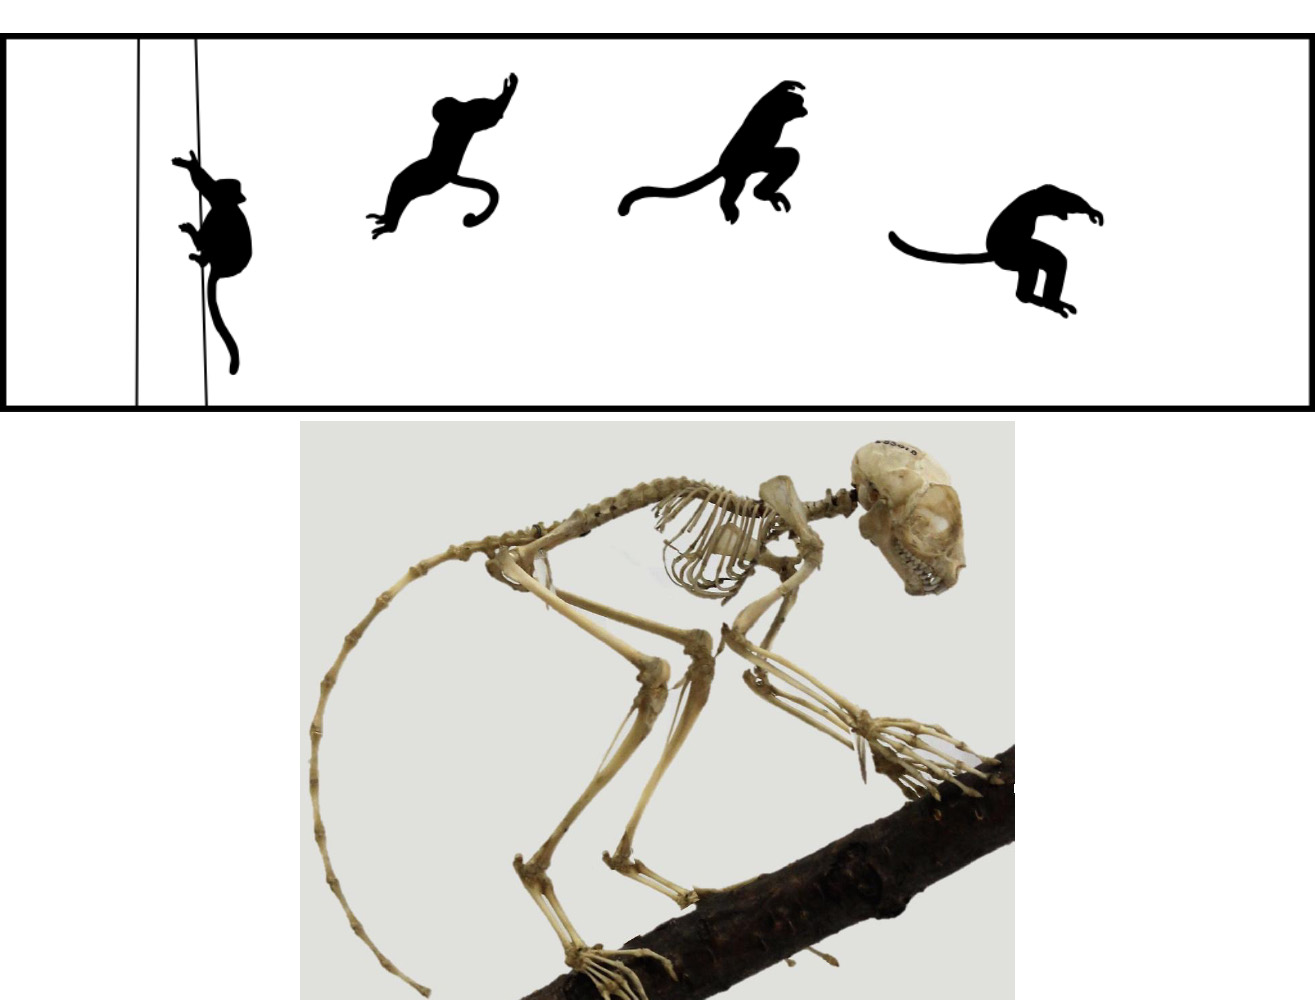 Movement of vertical clinger and leaper, and tarsier skeleton.